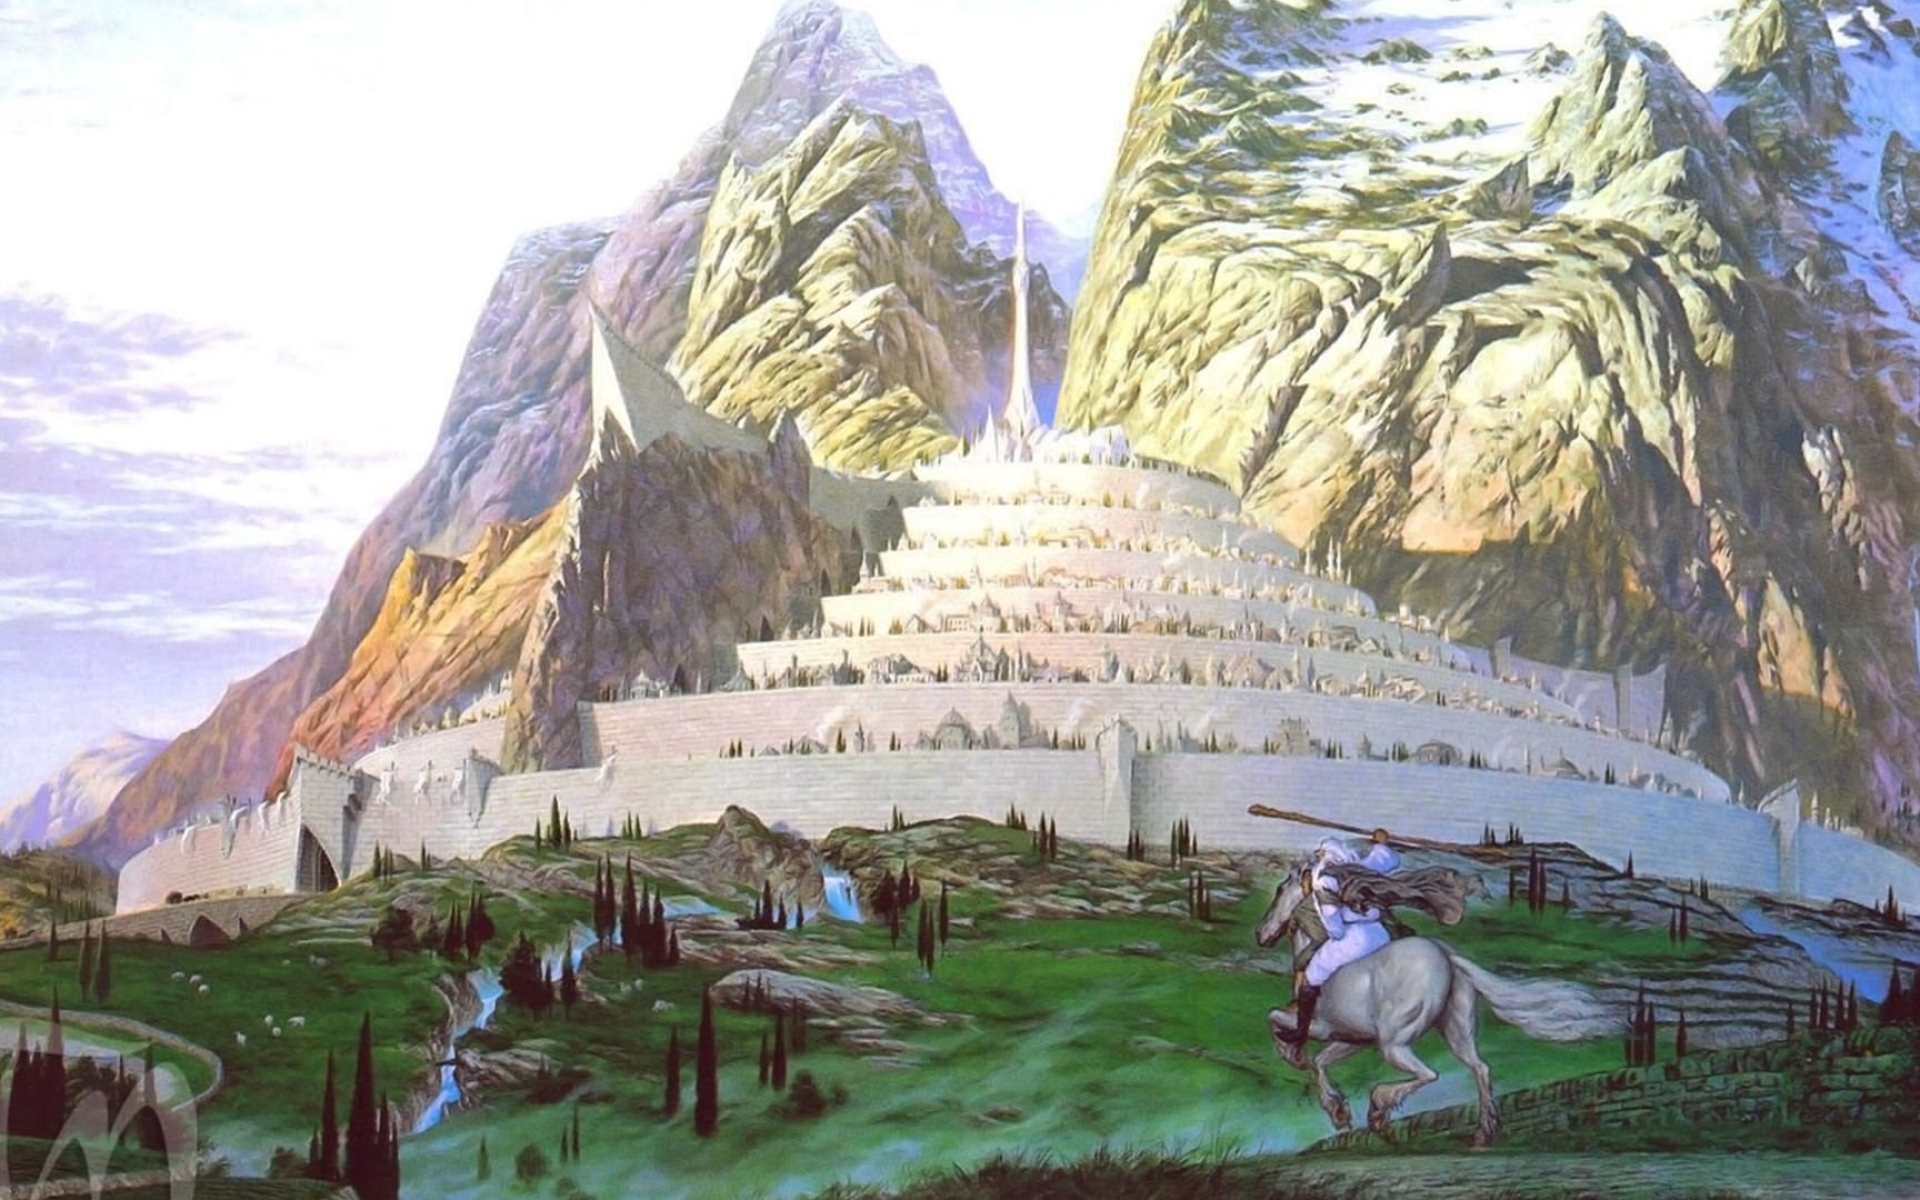 Gondor: Epic saga, The Tower of Guard, The Gondor's capital city from TA 1640 onward, Hall of Beorn. 1920x1200 HD Wallpaper.